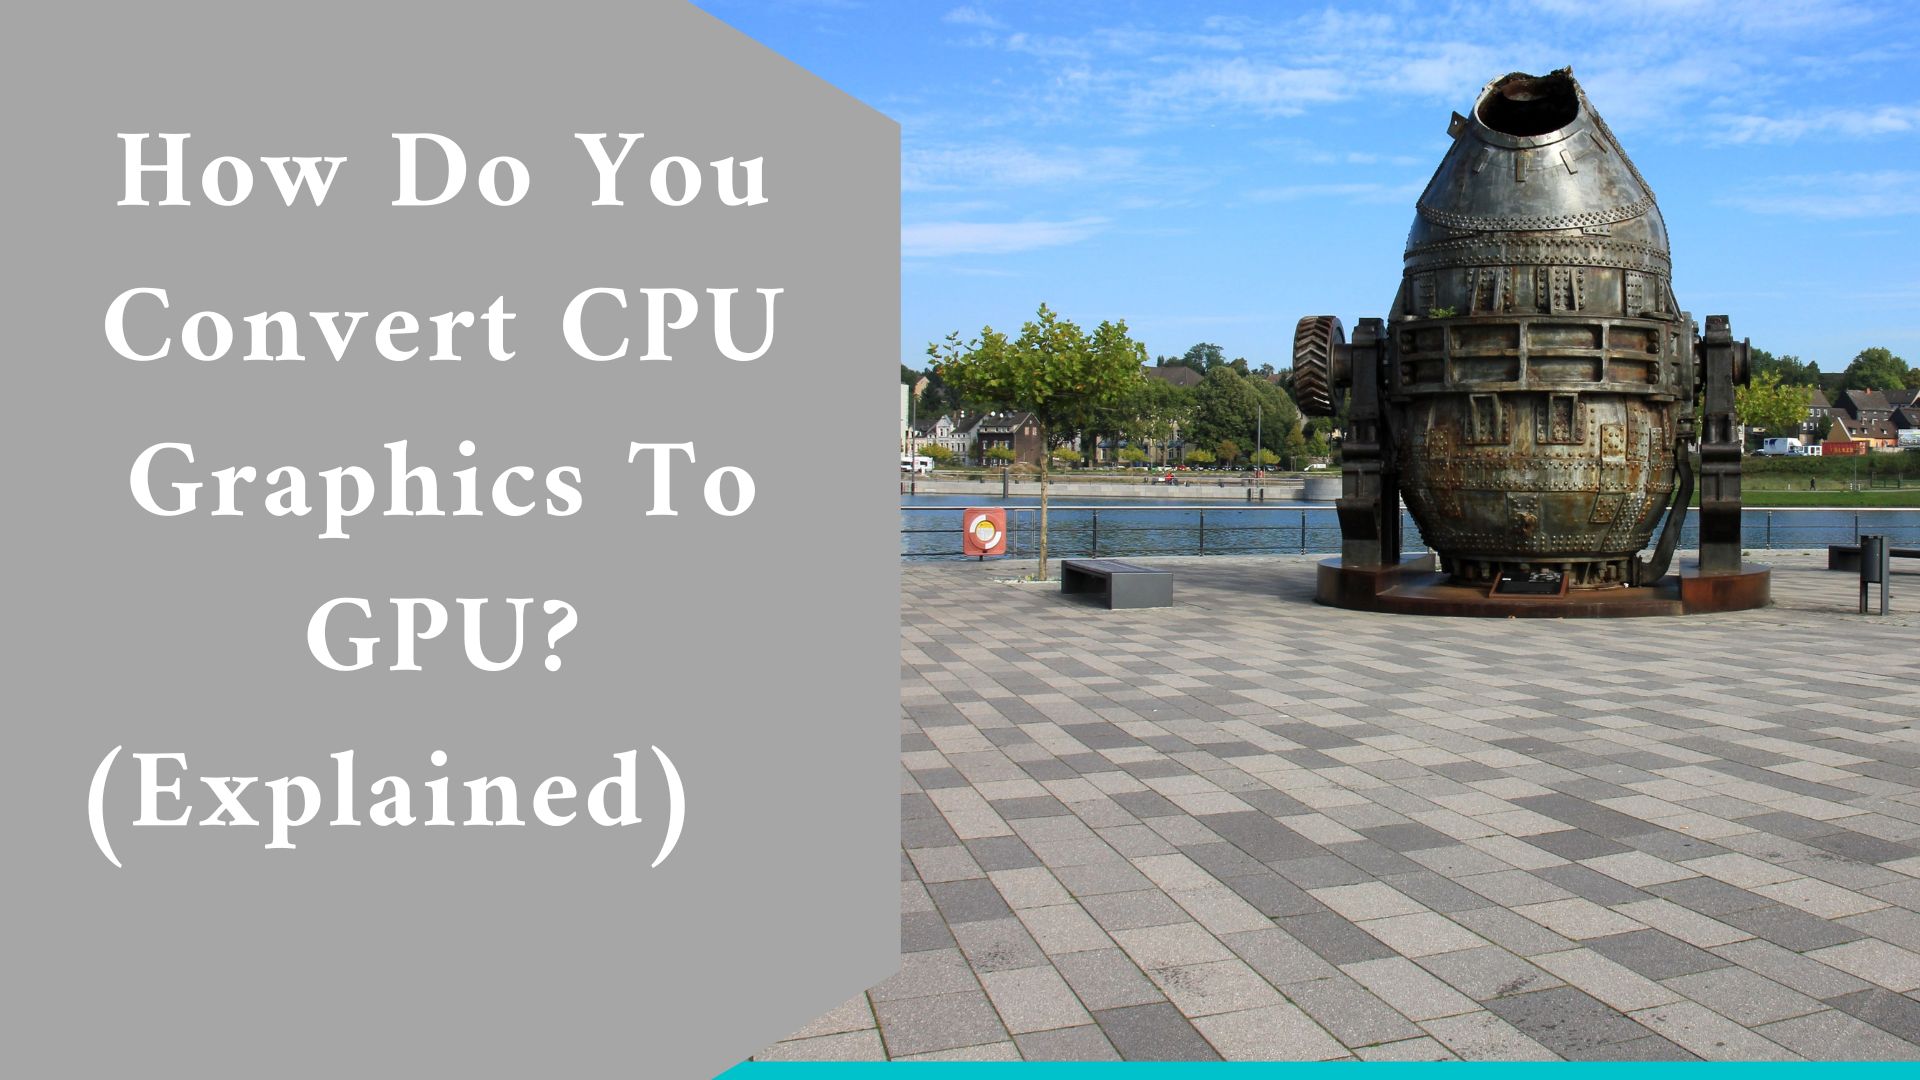 How Do You Convert CPU Graphics To GPU? (Explained)